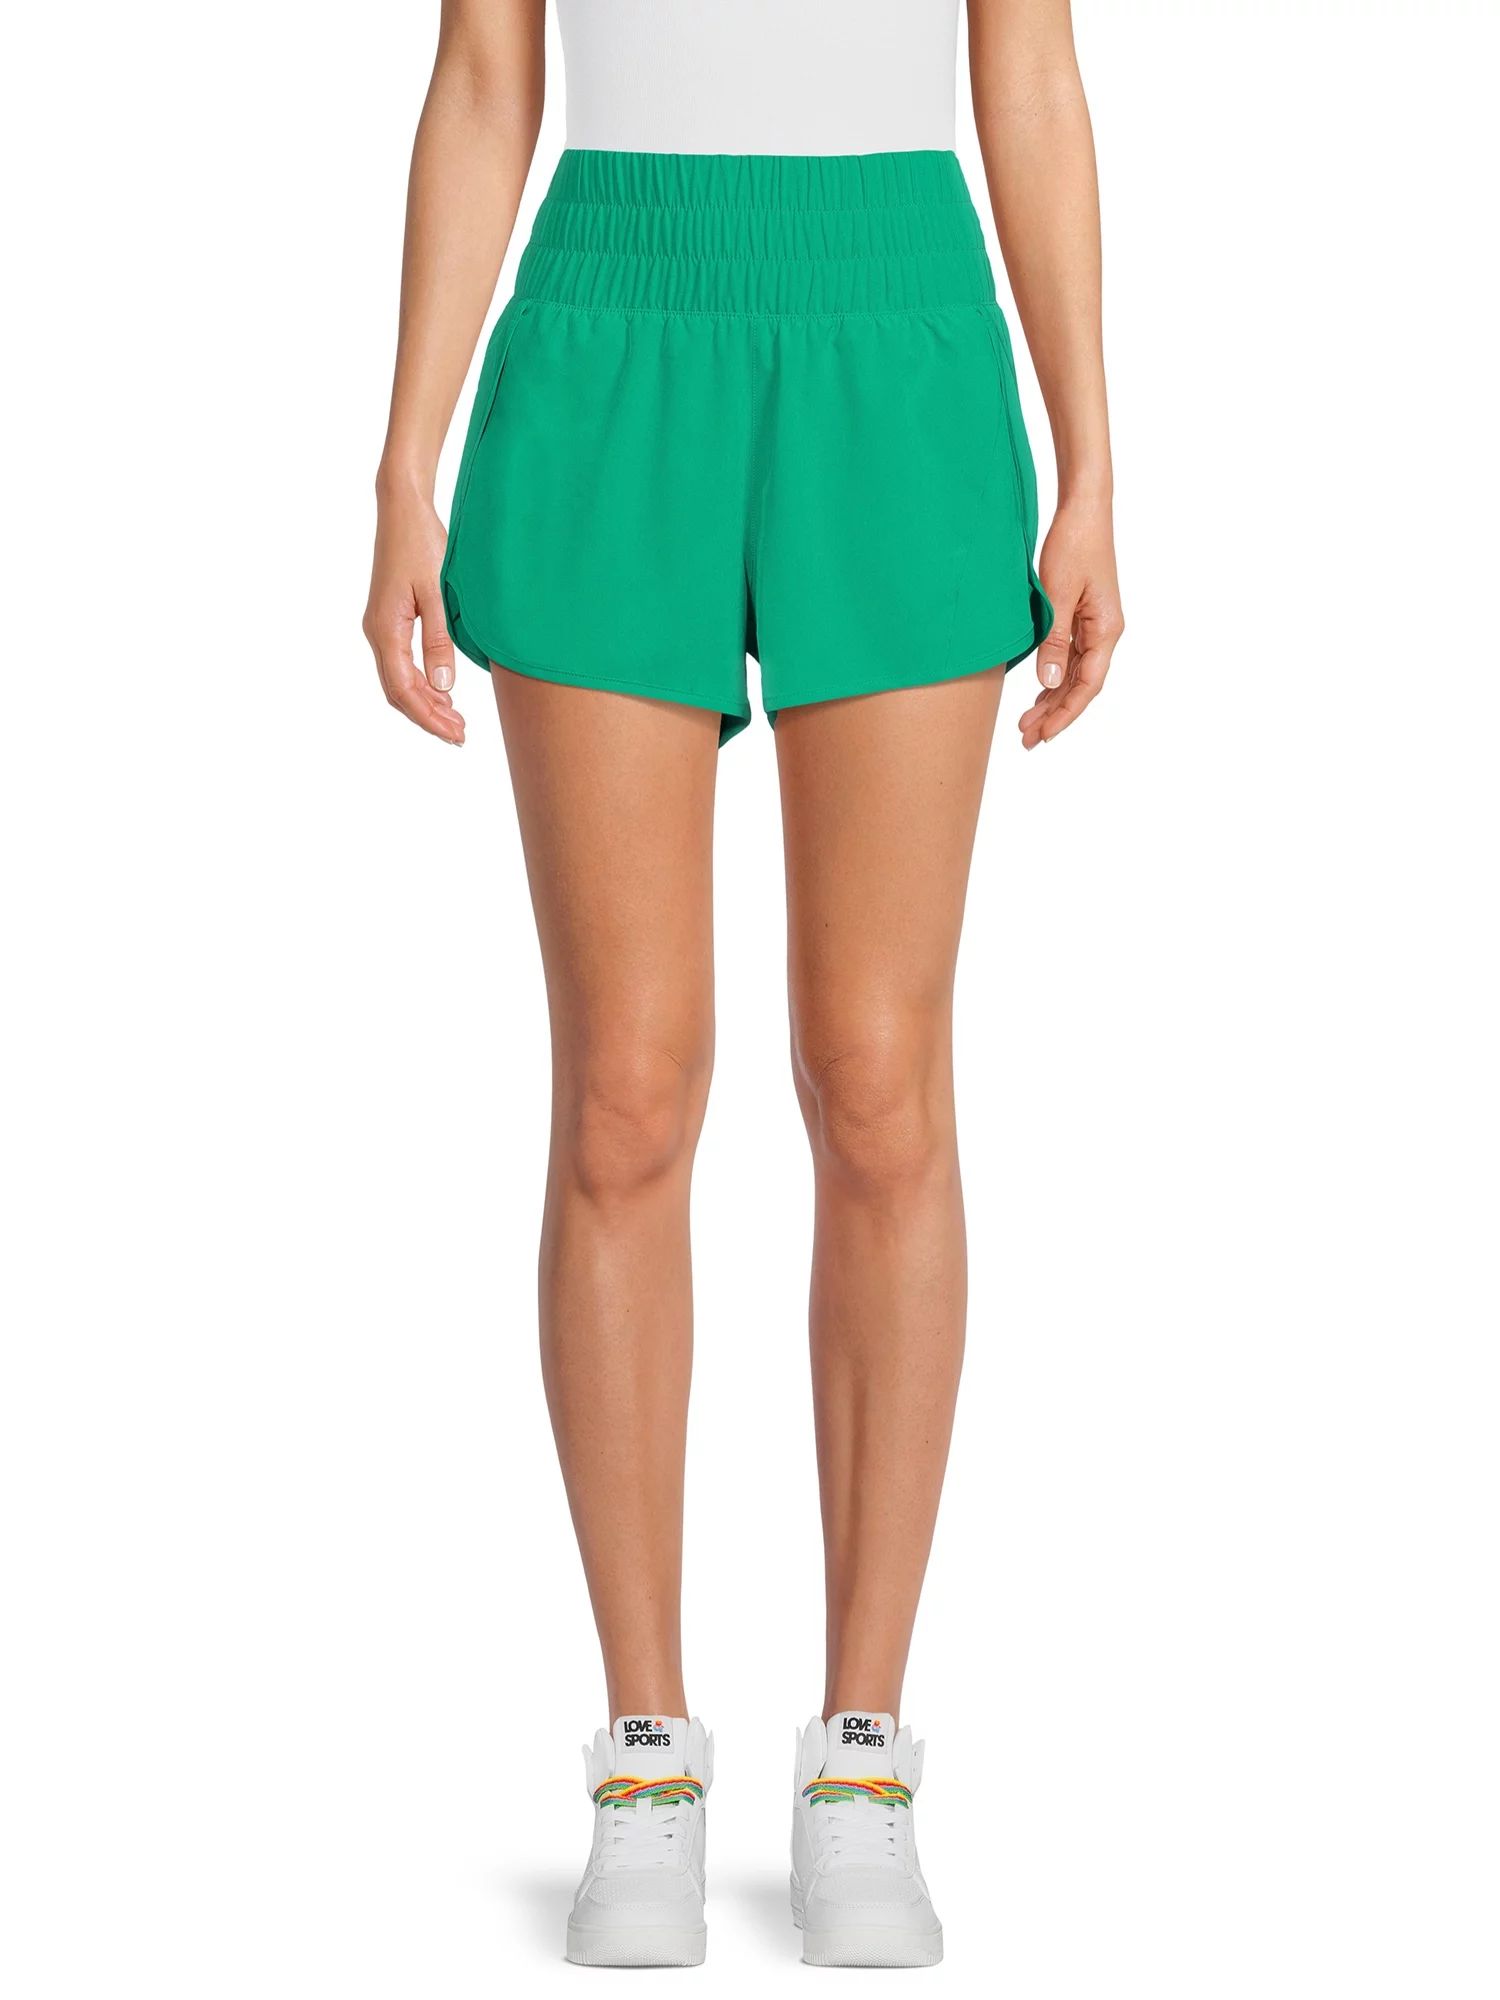 Avia Womens' Running Short with Brief, Sizes XS - XXXL | Walmart (US)